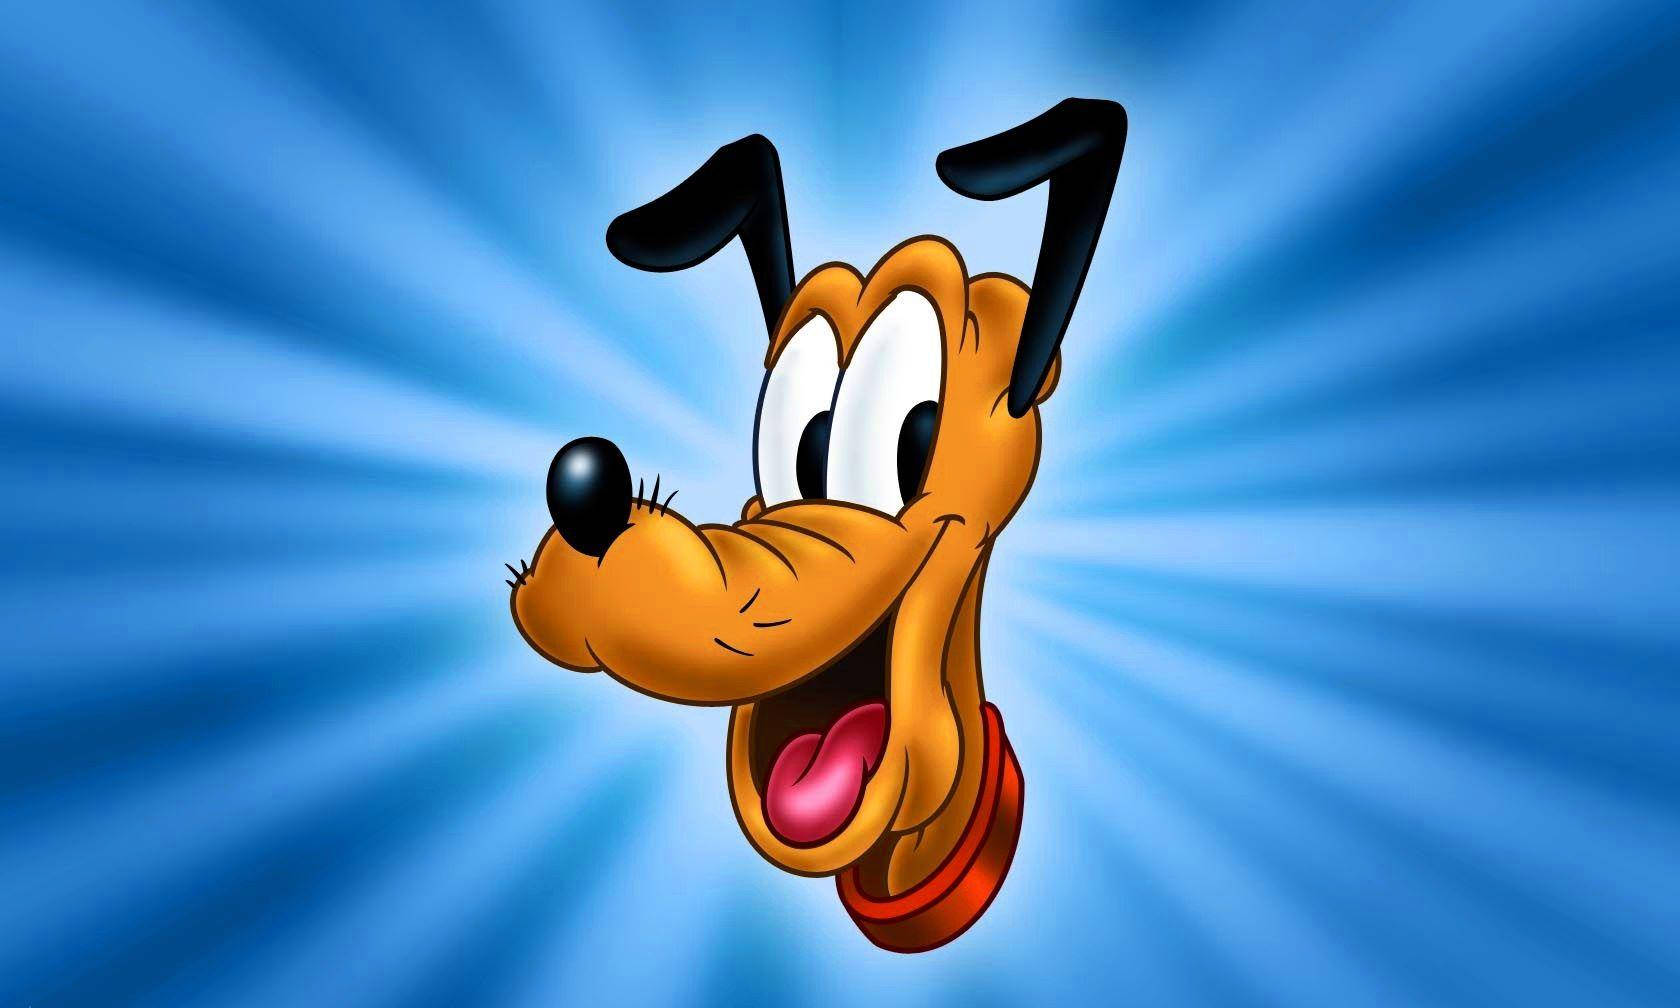 Endearing Image Of Disney's Loyal Dog, Pluto Wallpaper